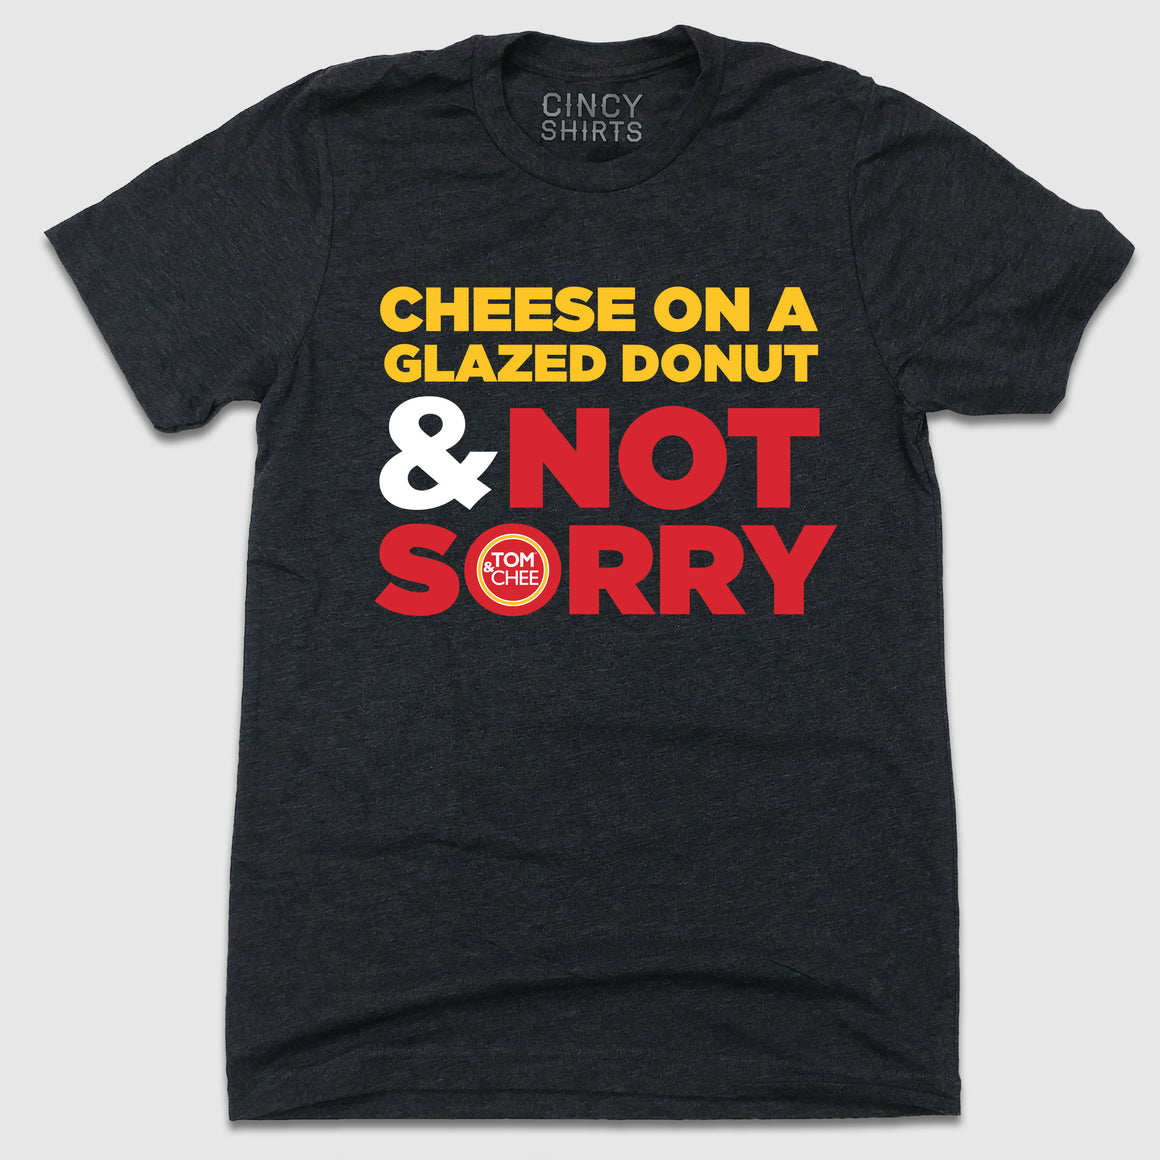 Tom & Chee Not Sorry - Cincy Shirts